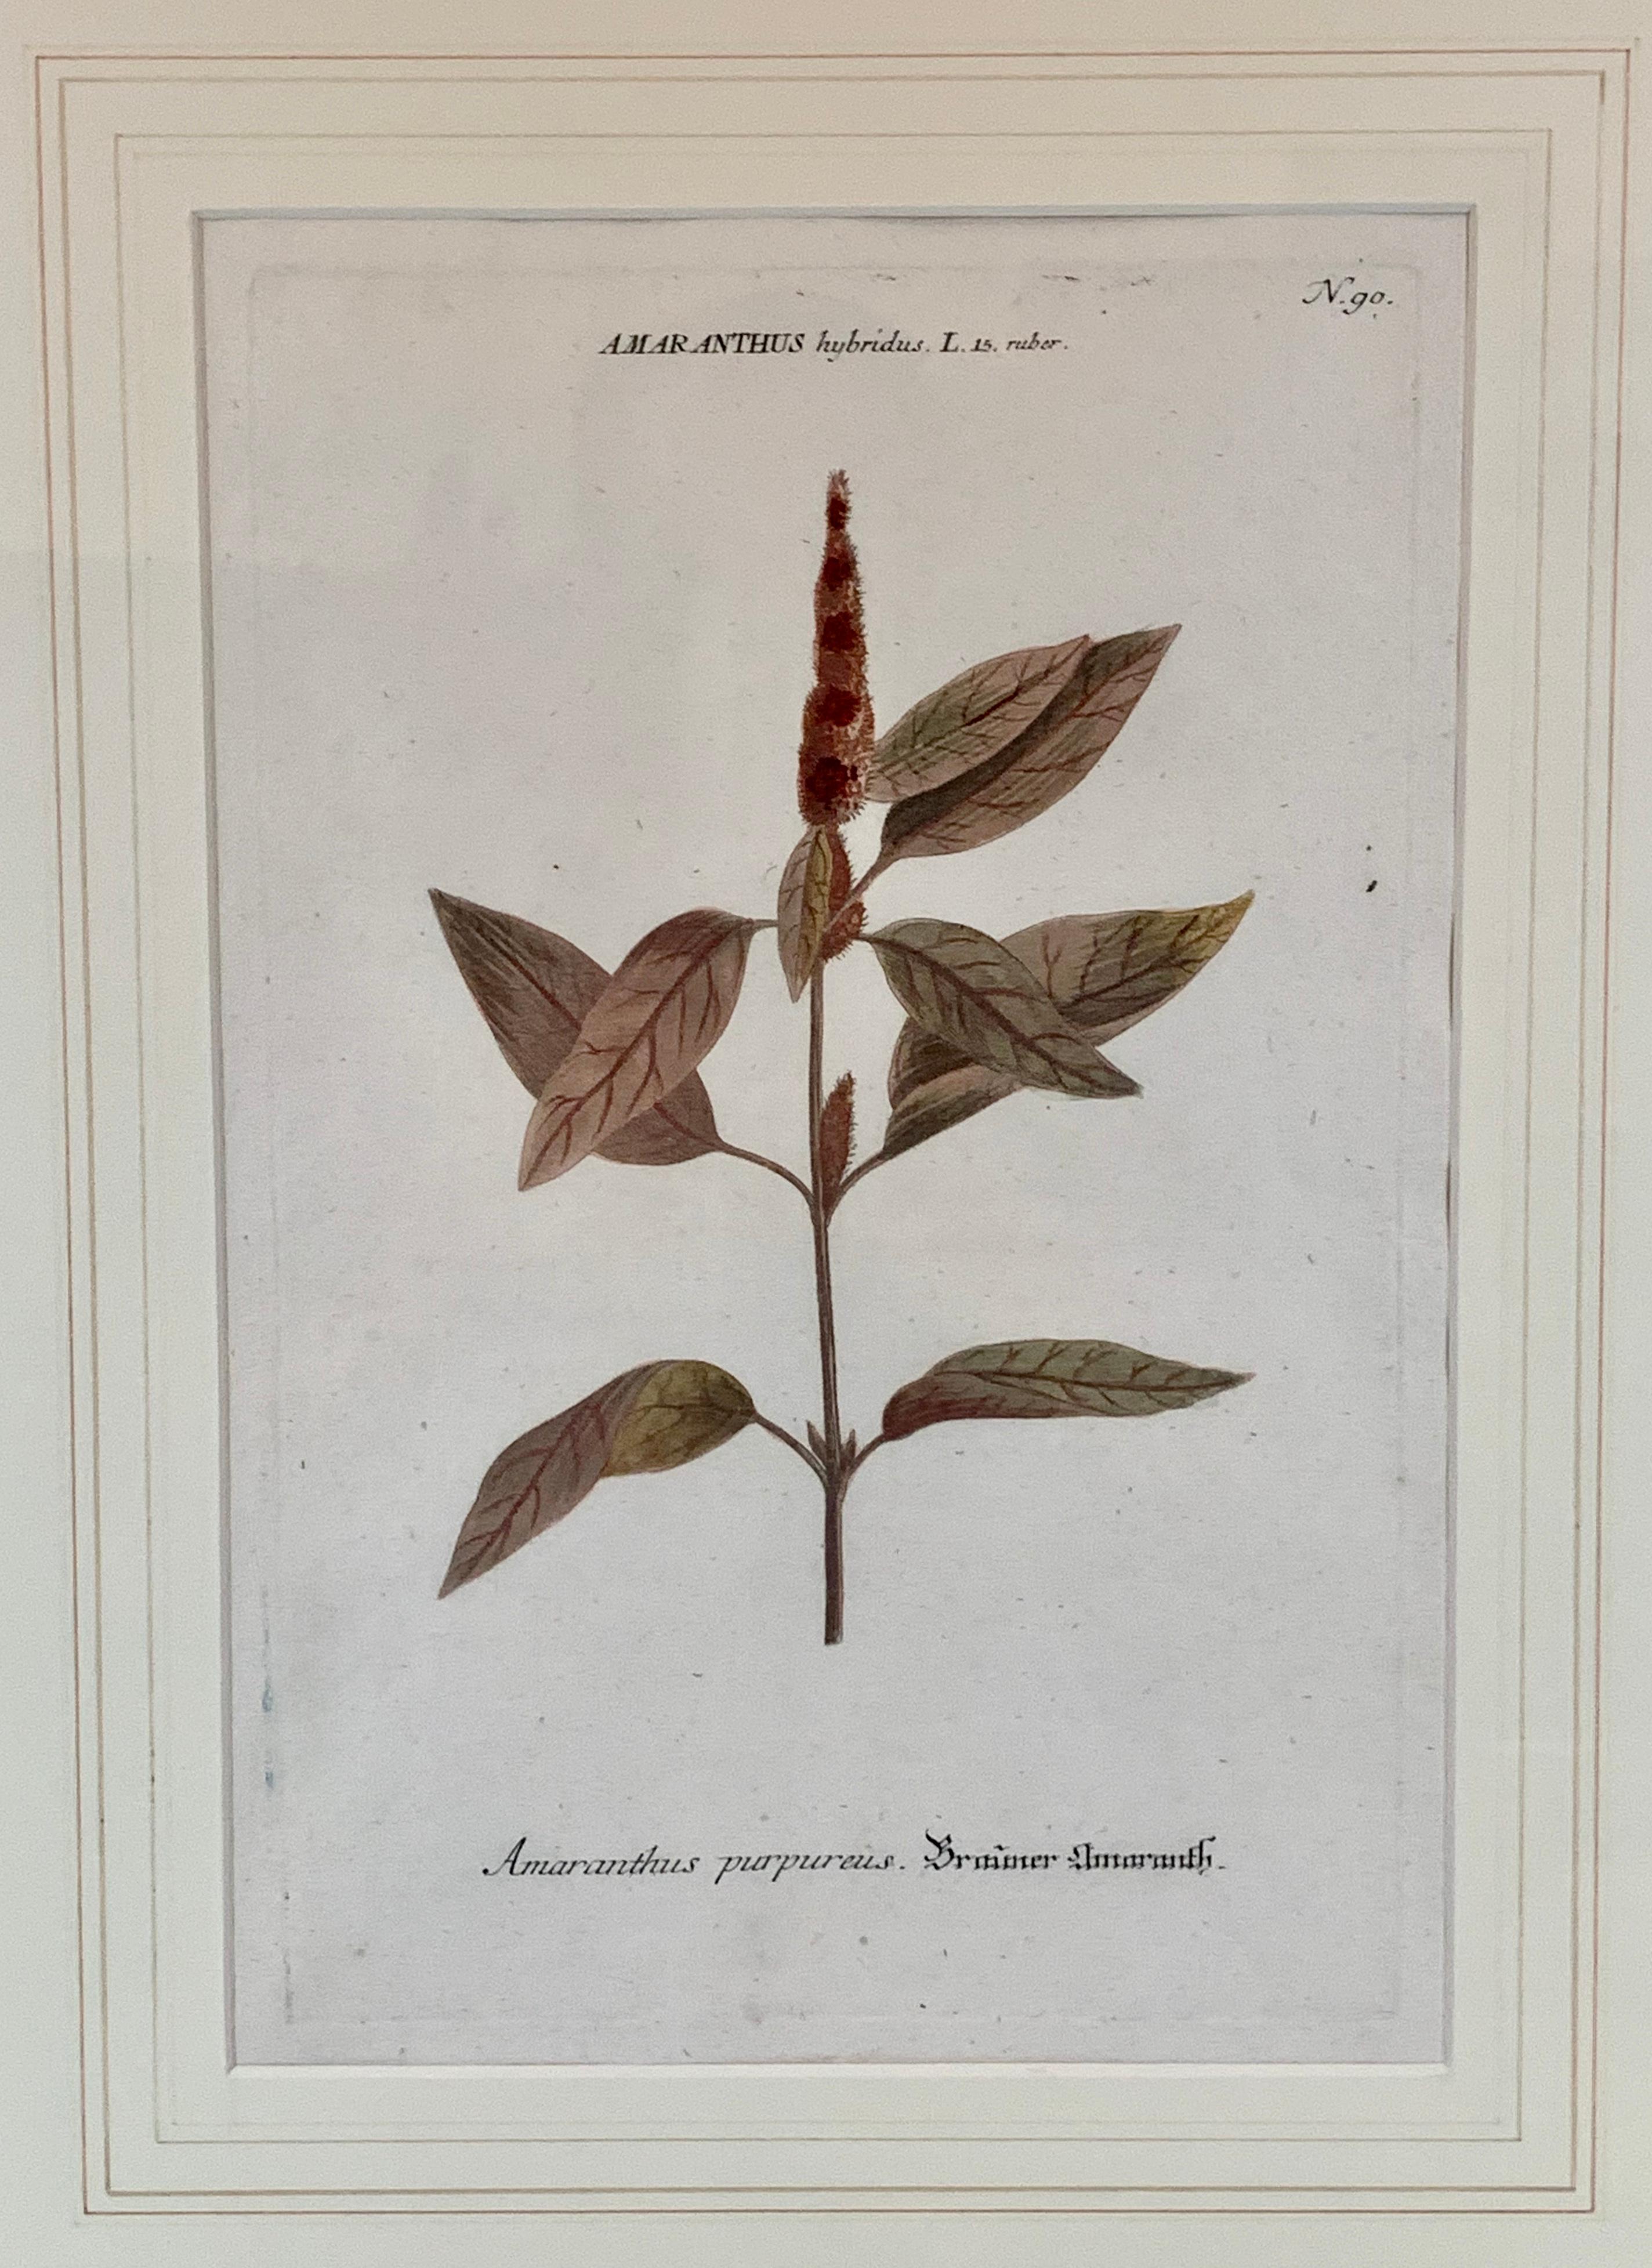 Botanical by Johann Wilhelm Weimann (1683-1741) published this print 